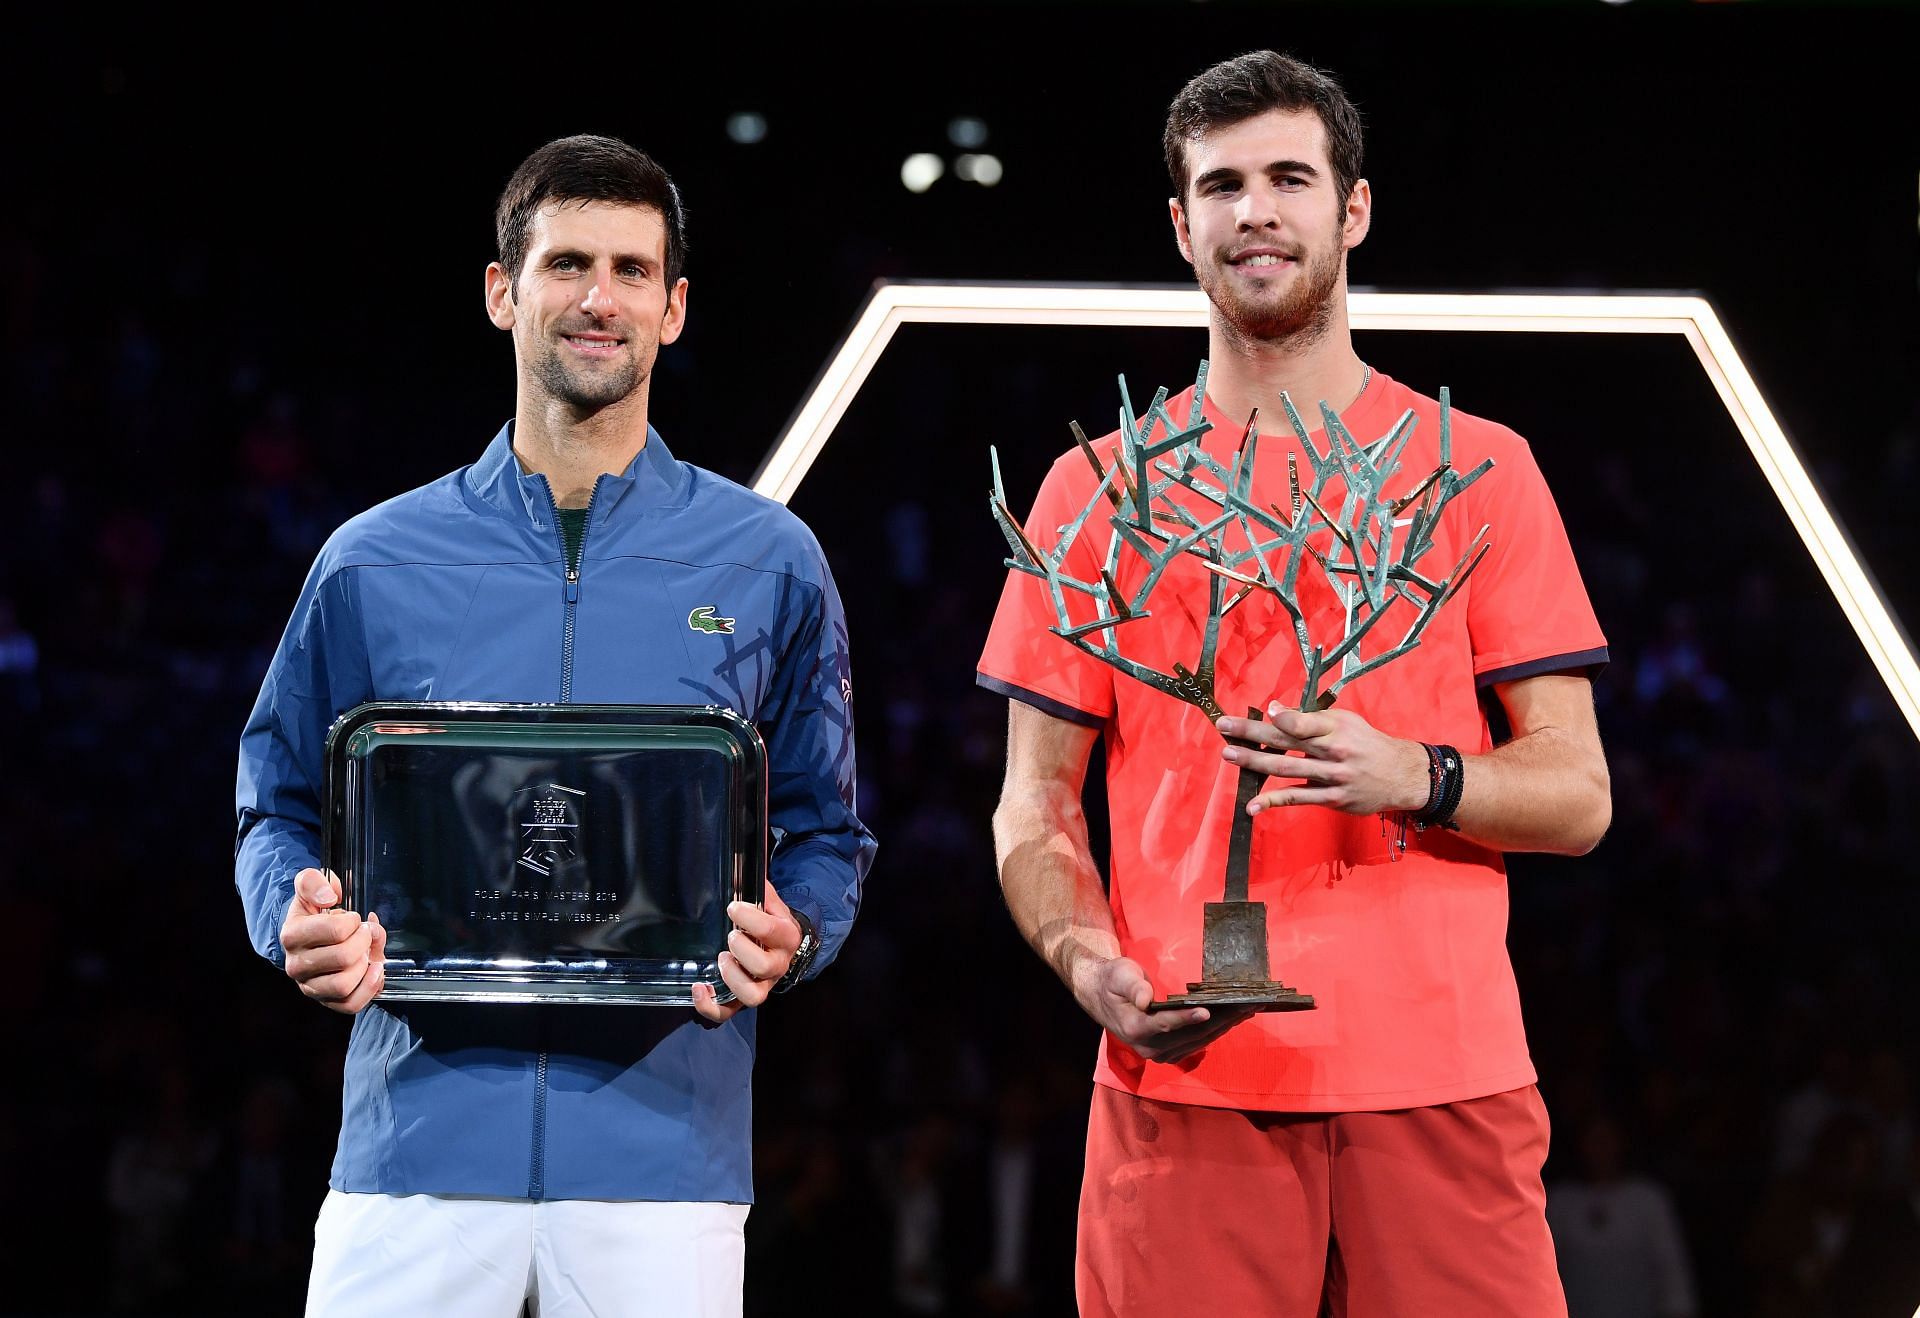 Novak Djokovic vs Karen Khachanov Where to watch, TV schedule, live streaming details and more 2022 Paris Masters